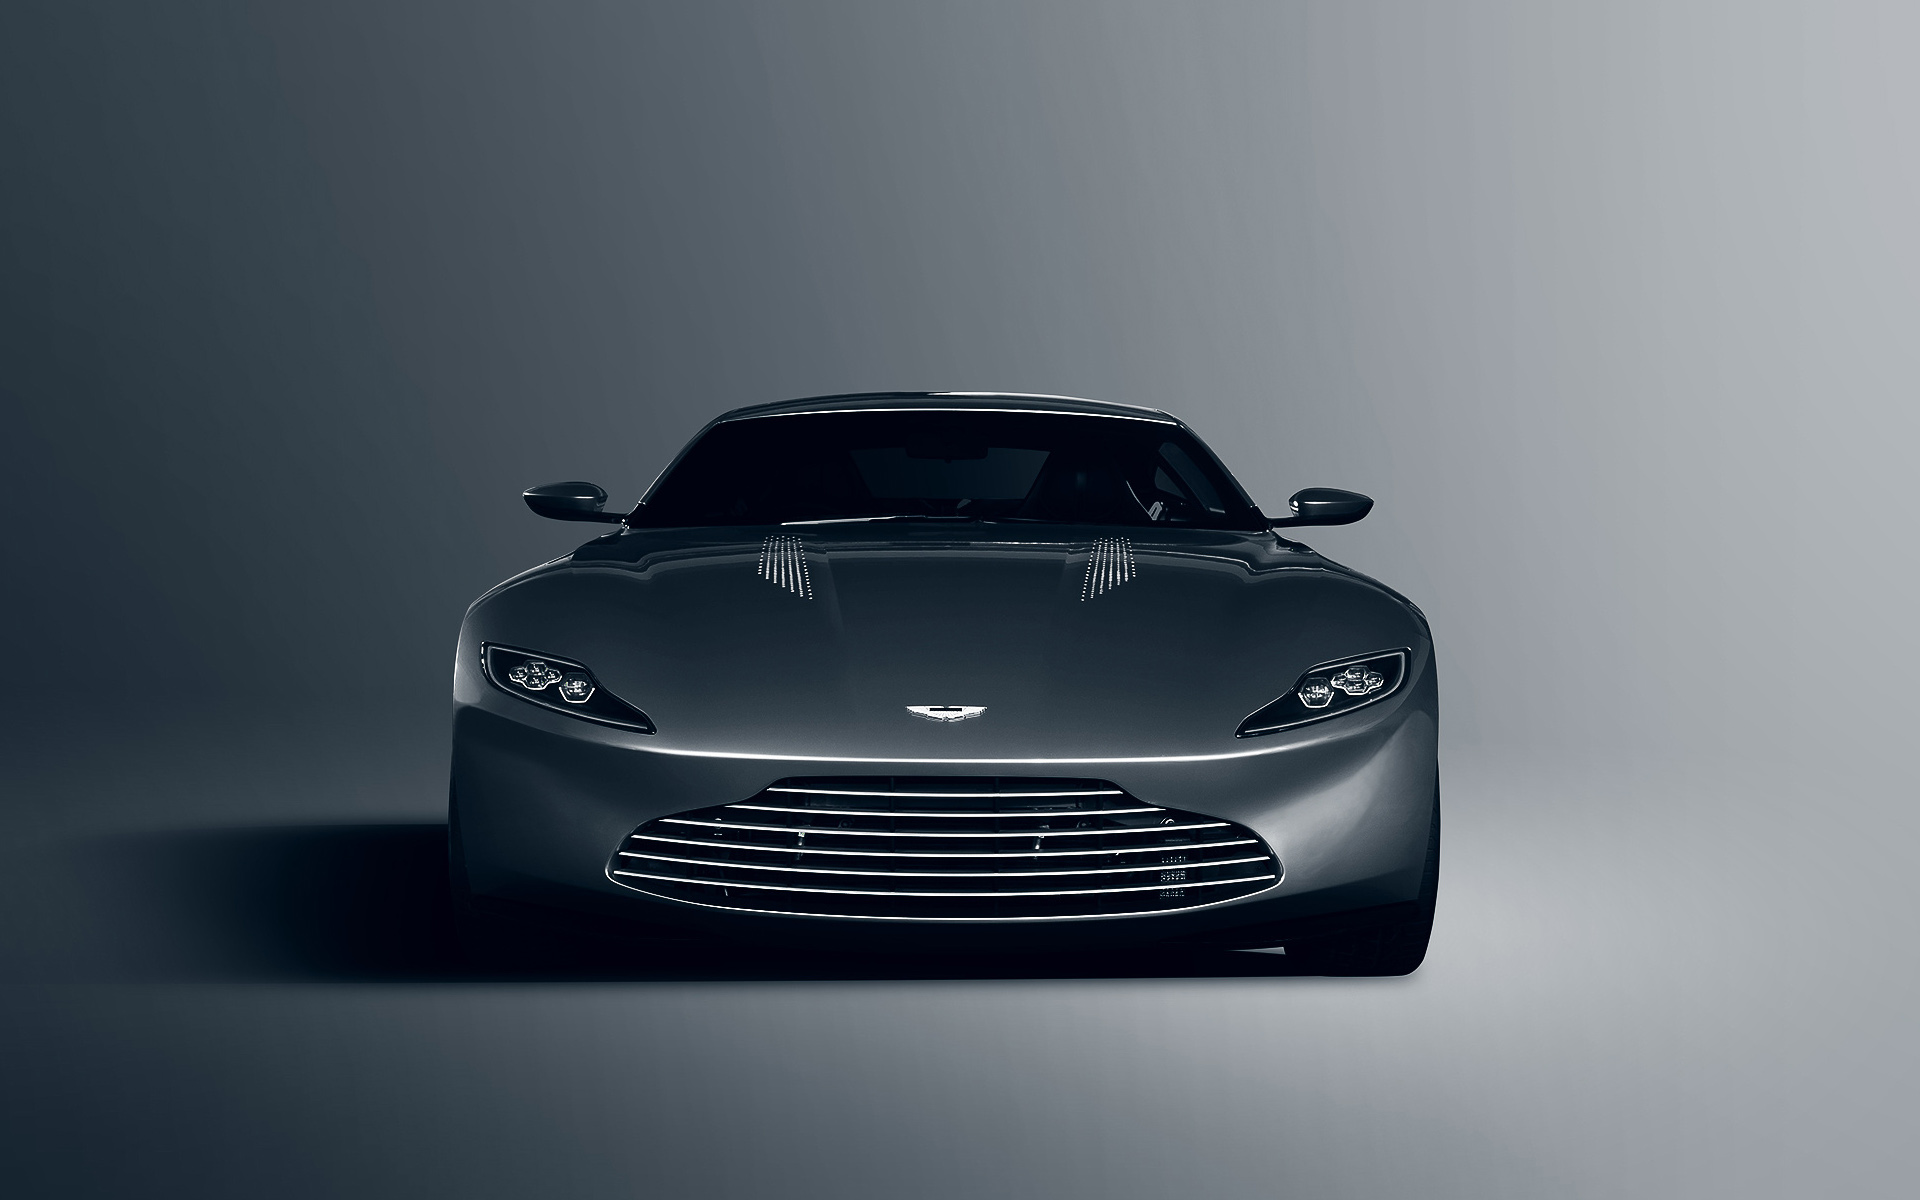 HQ Aston Martin DB10 Wallpapers | File 337.55Kb